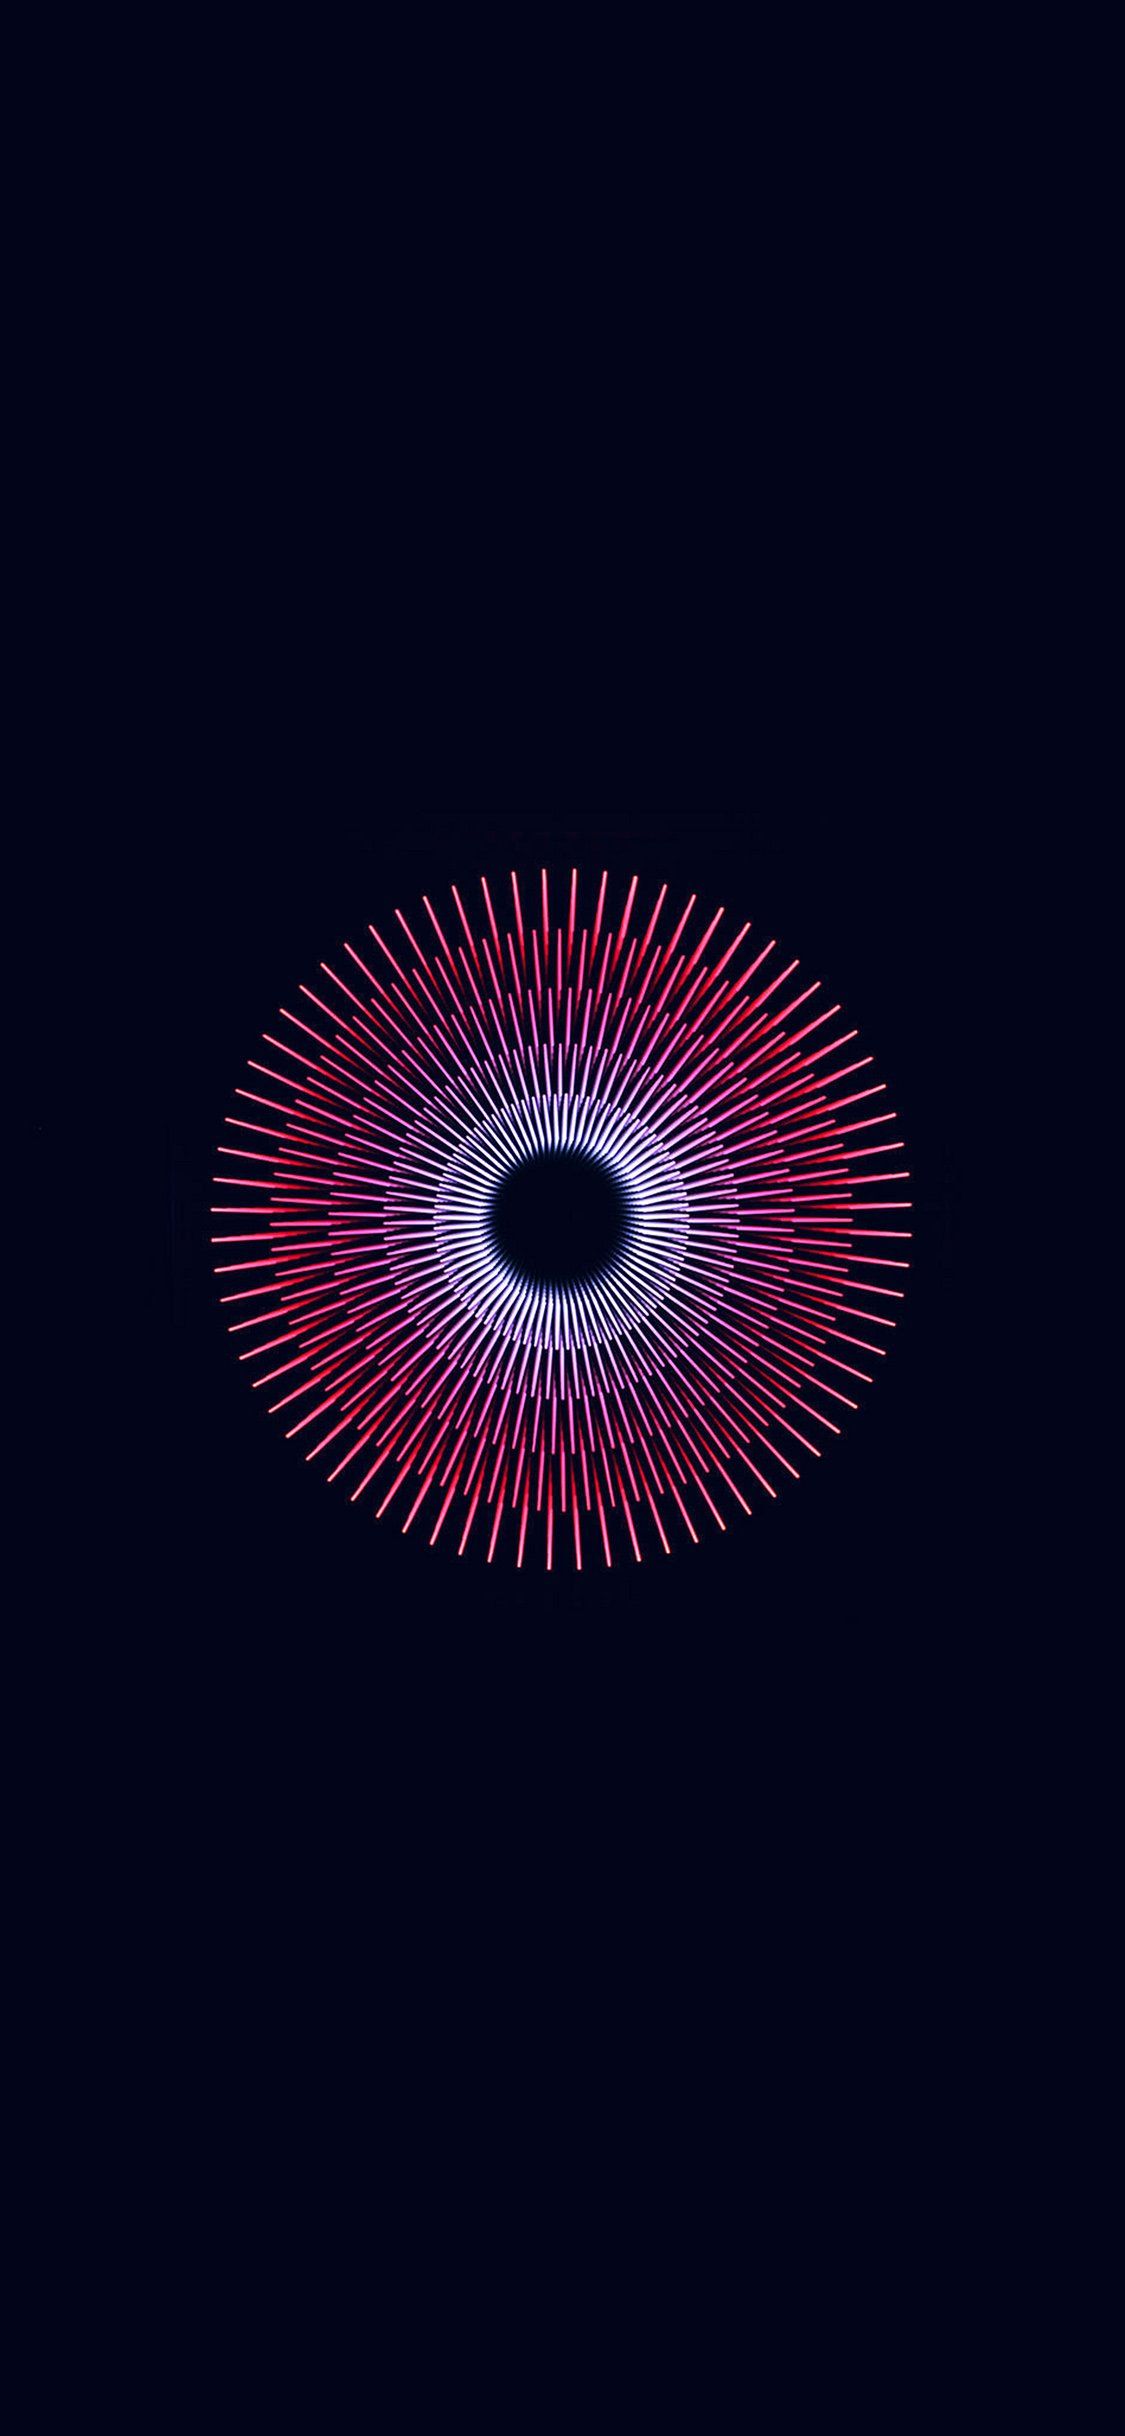 iPhone X wallpaper. line circle minimal dark black pattern background